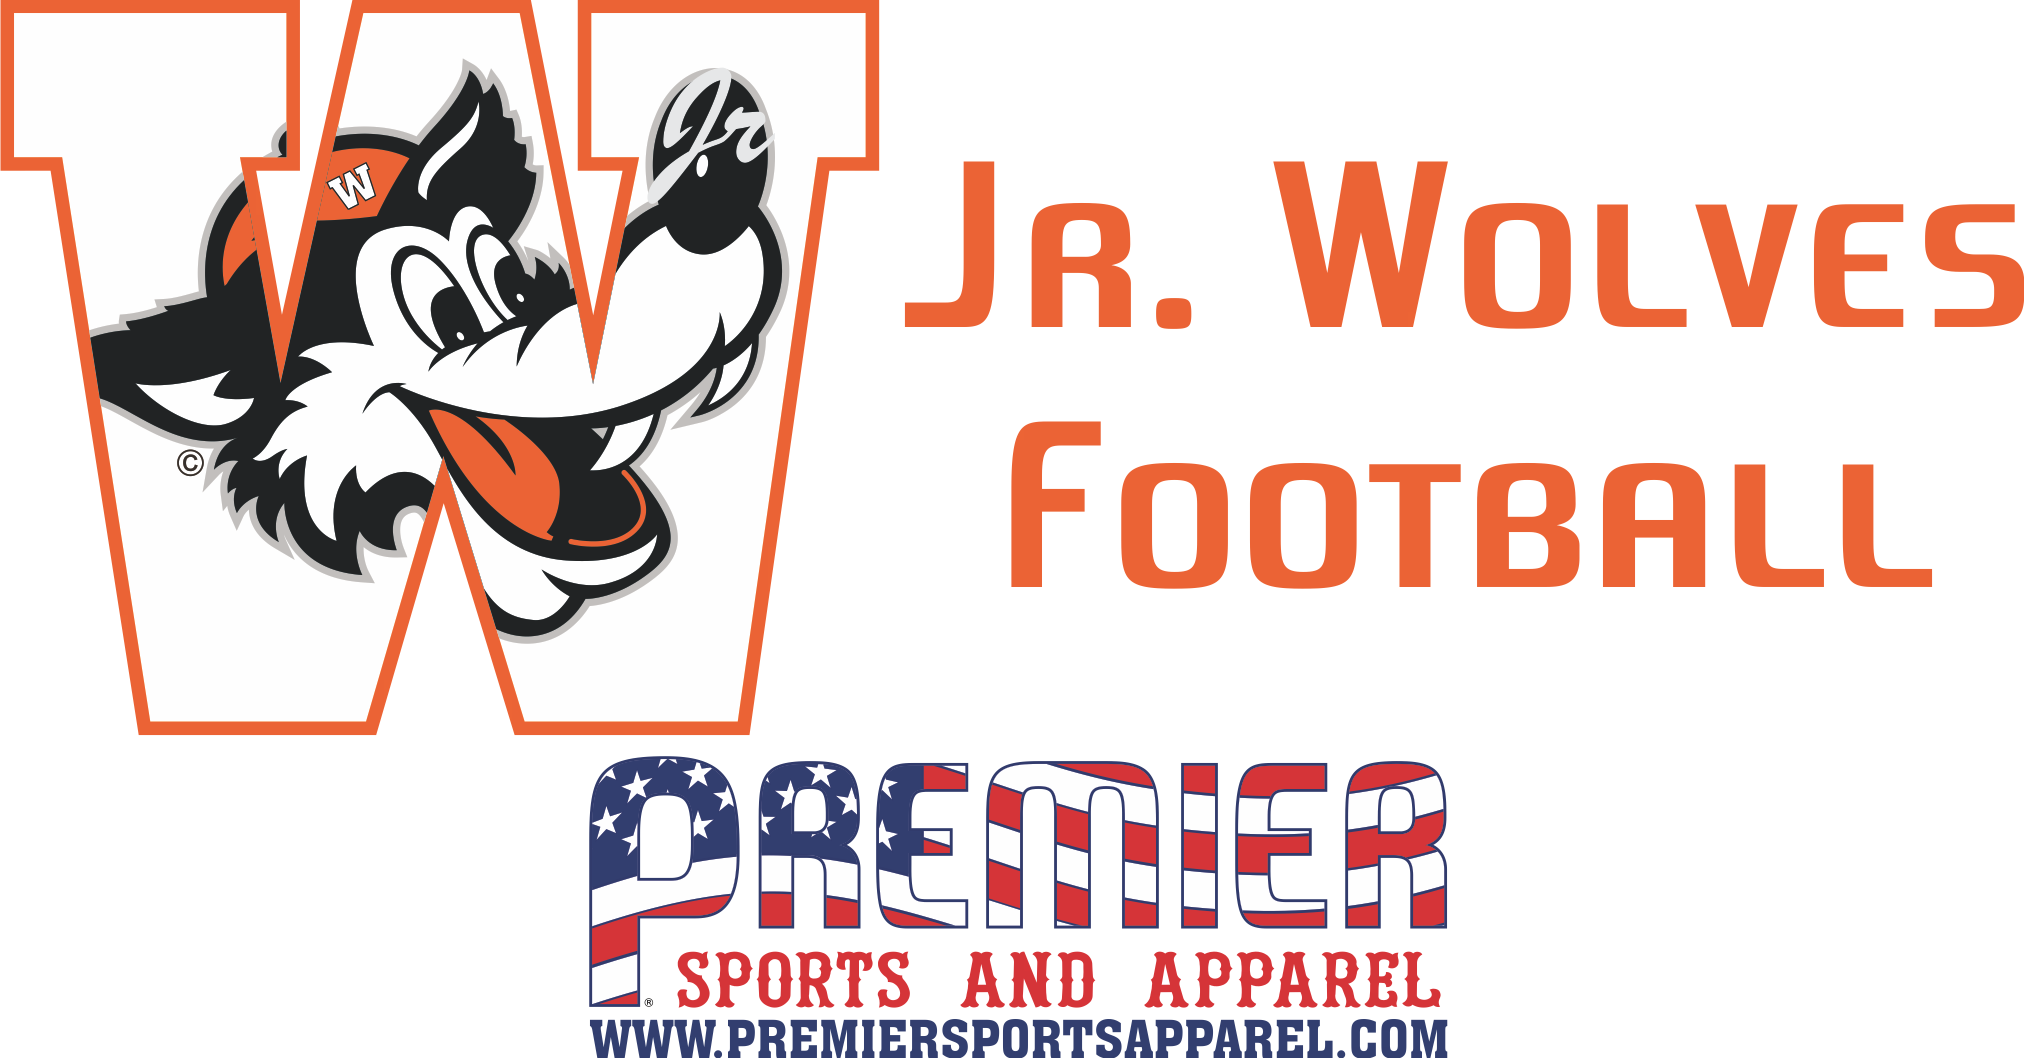 Woodland Jr. Wolves Football